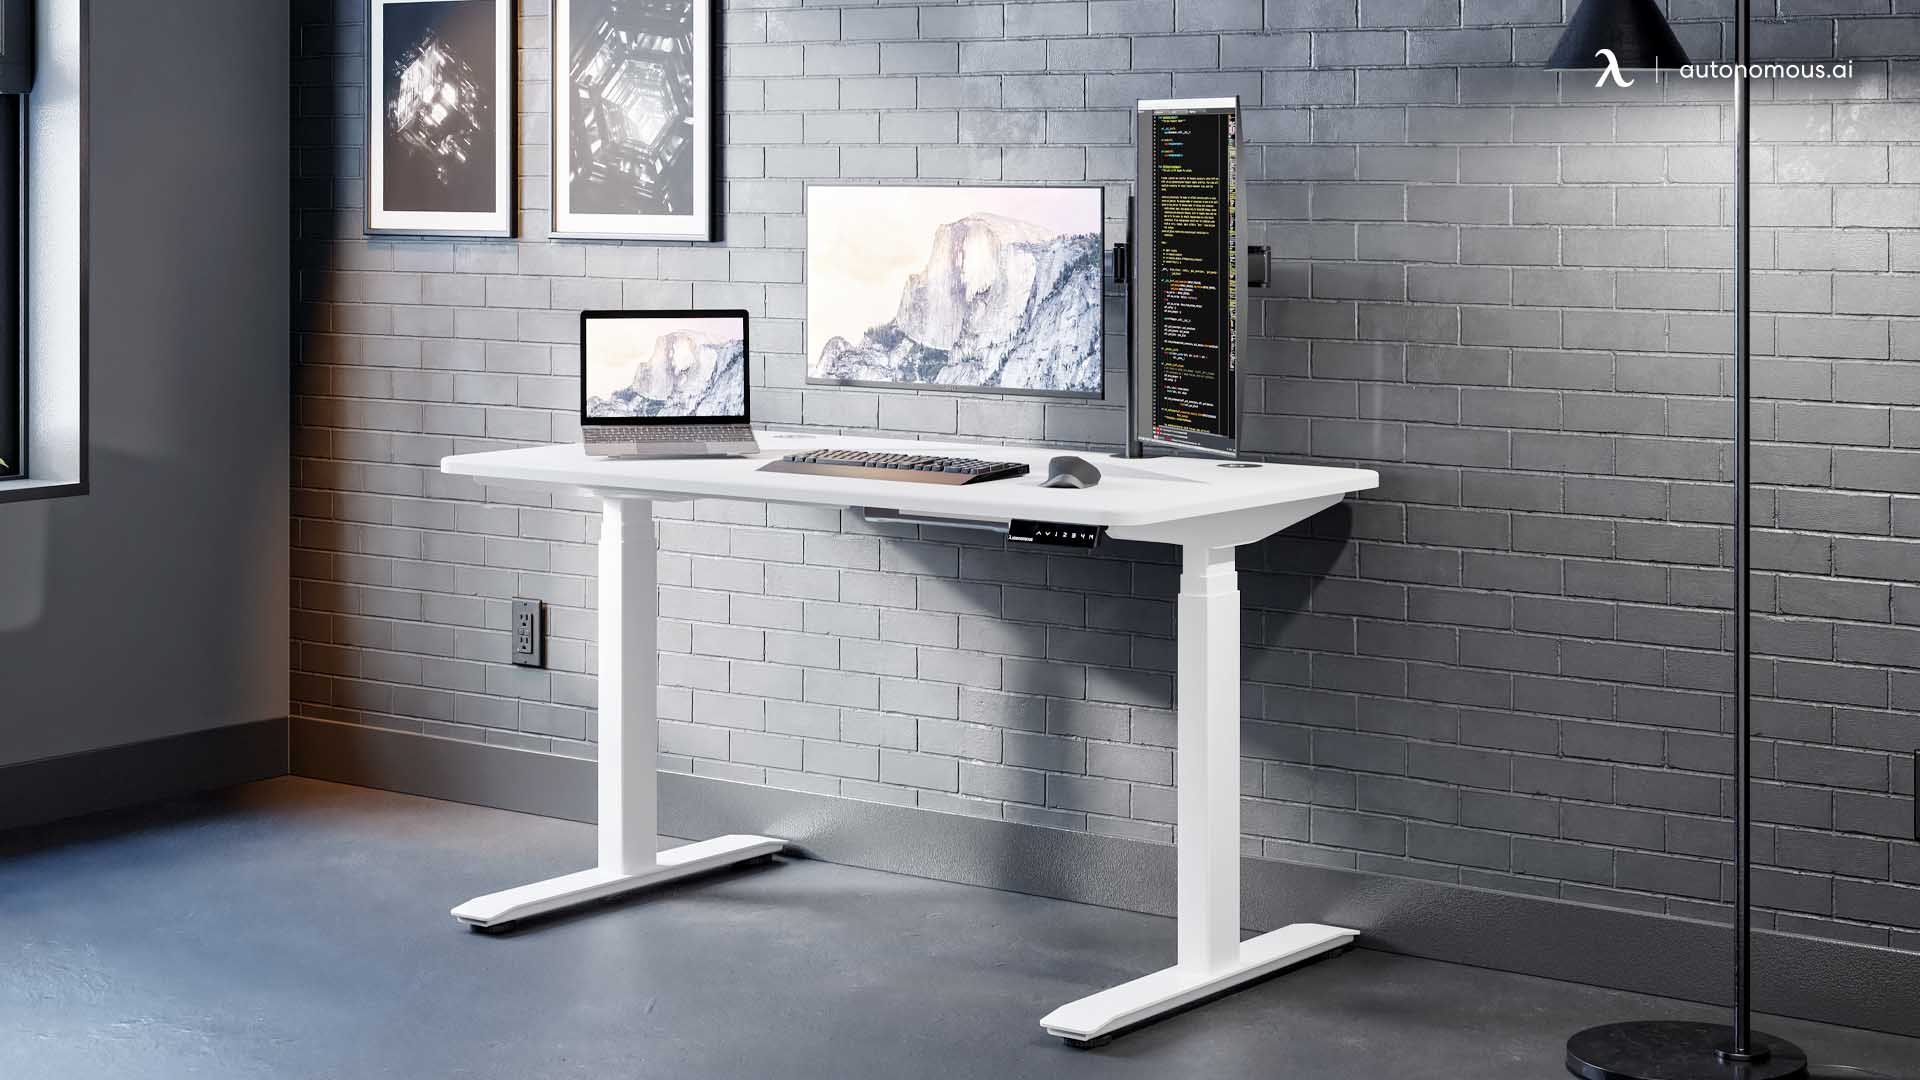 Application Developer home desk setup